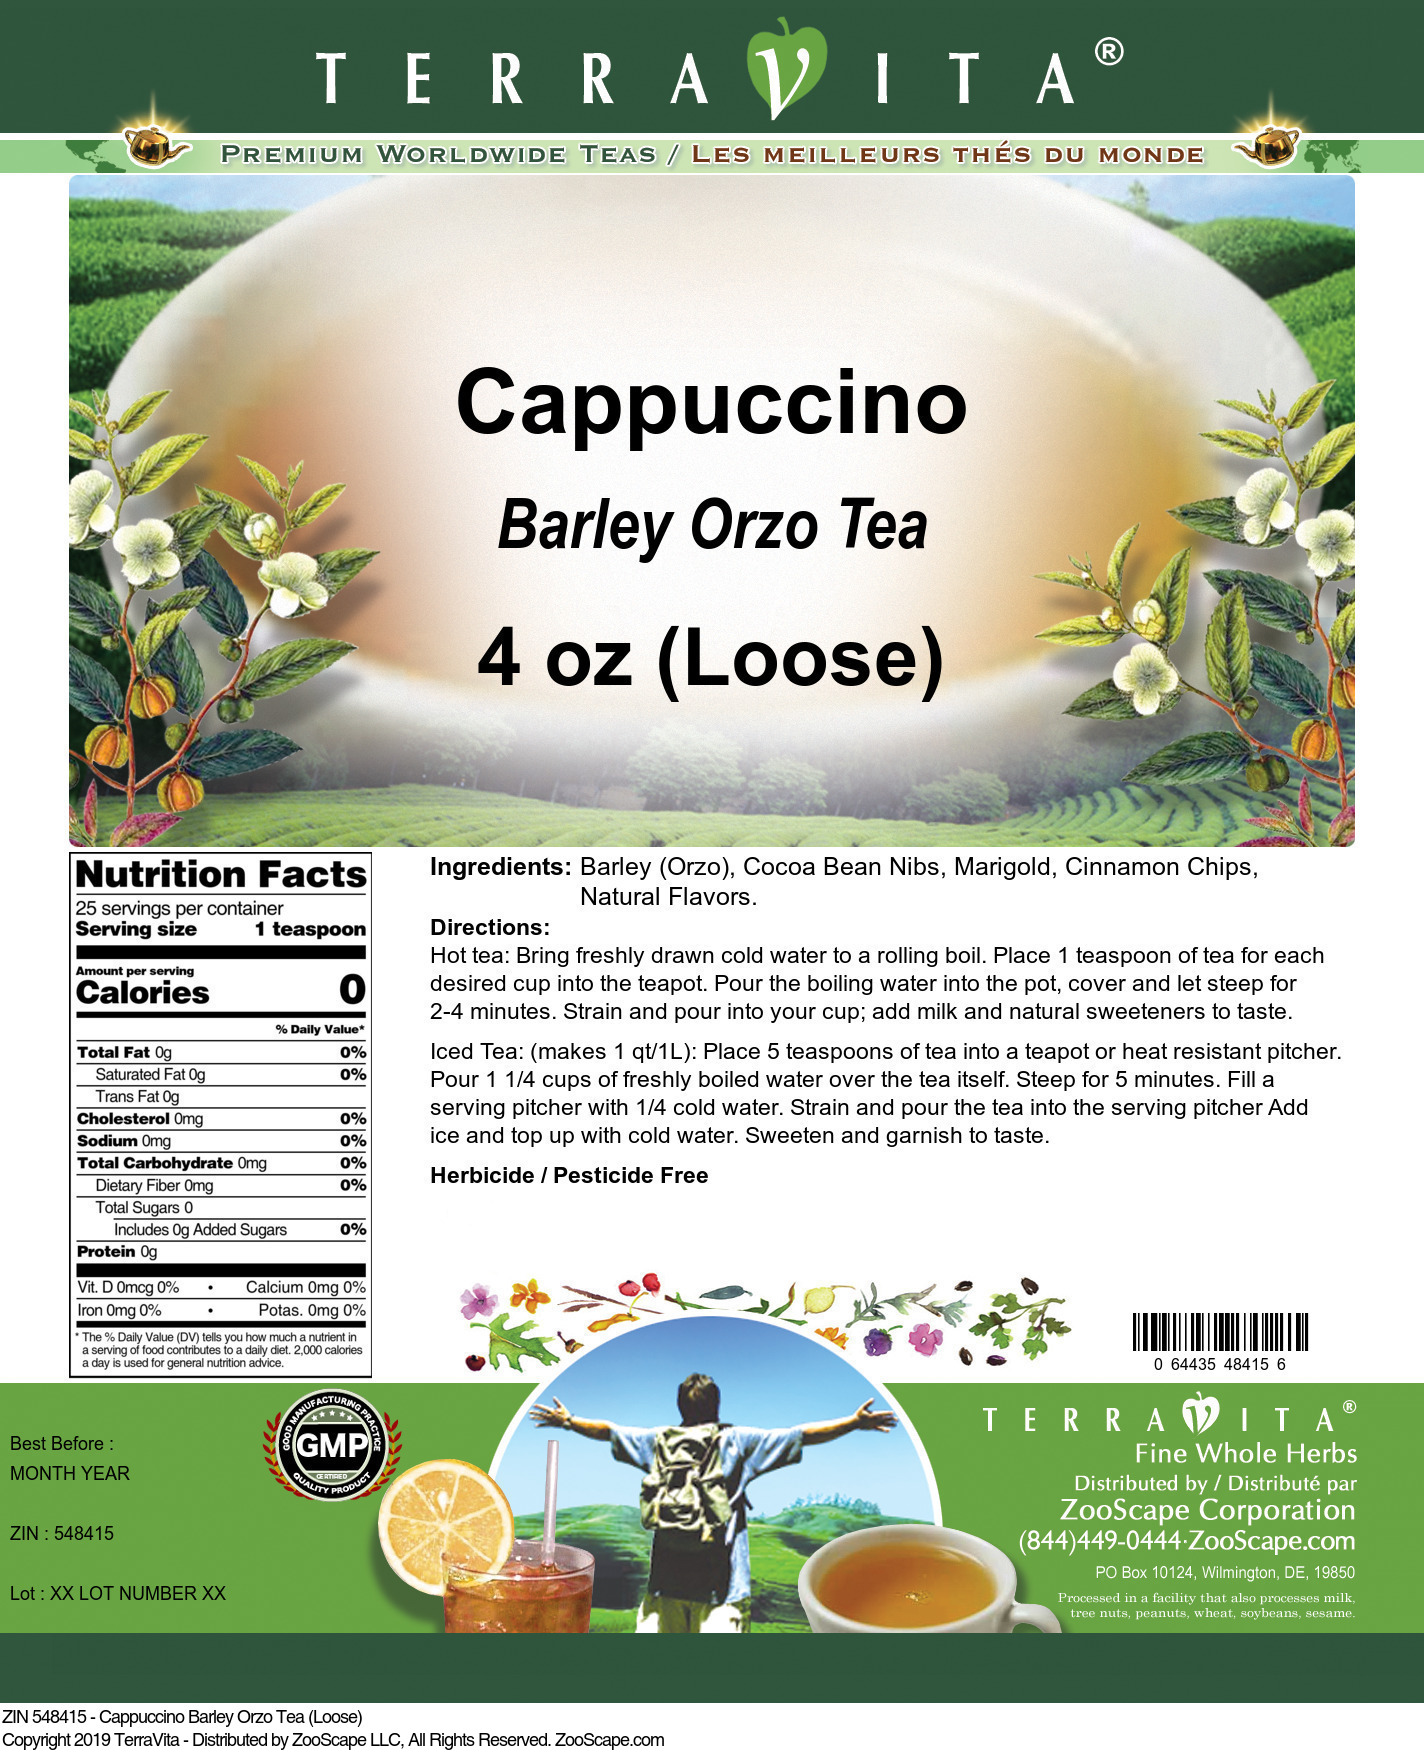 Cappuccino Barley Orzo Tea (Loose) - Label